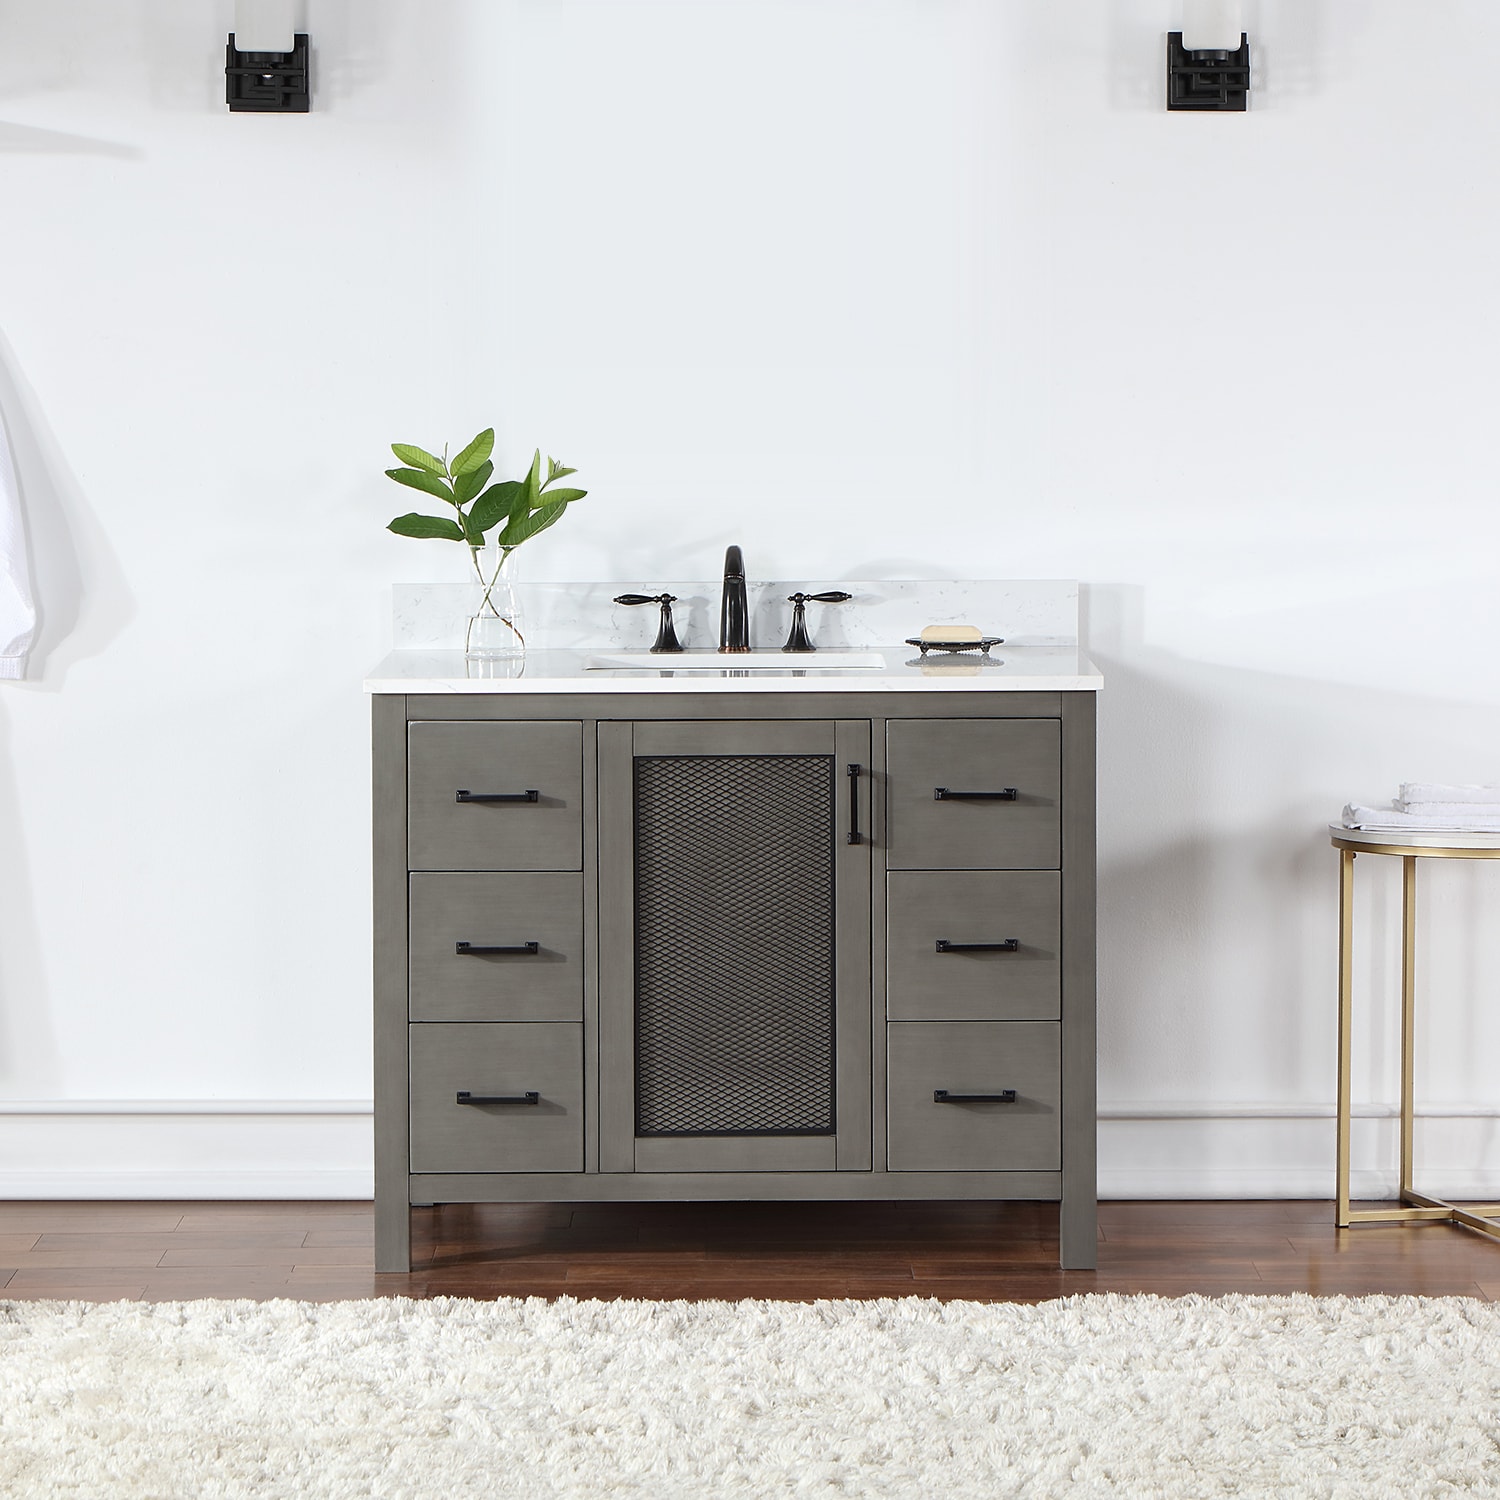 42 in. Sink & Drawer Bathroom Vanity Base Cabinet in Unfinished Poplar